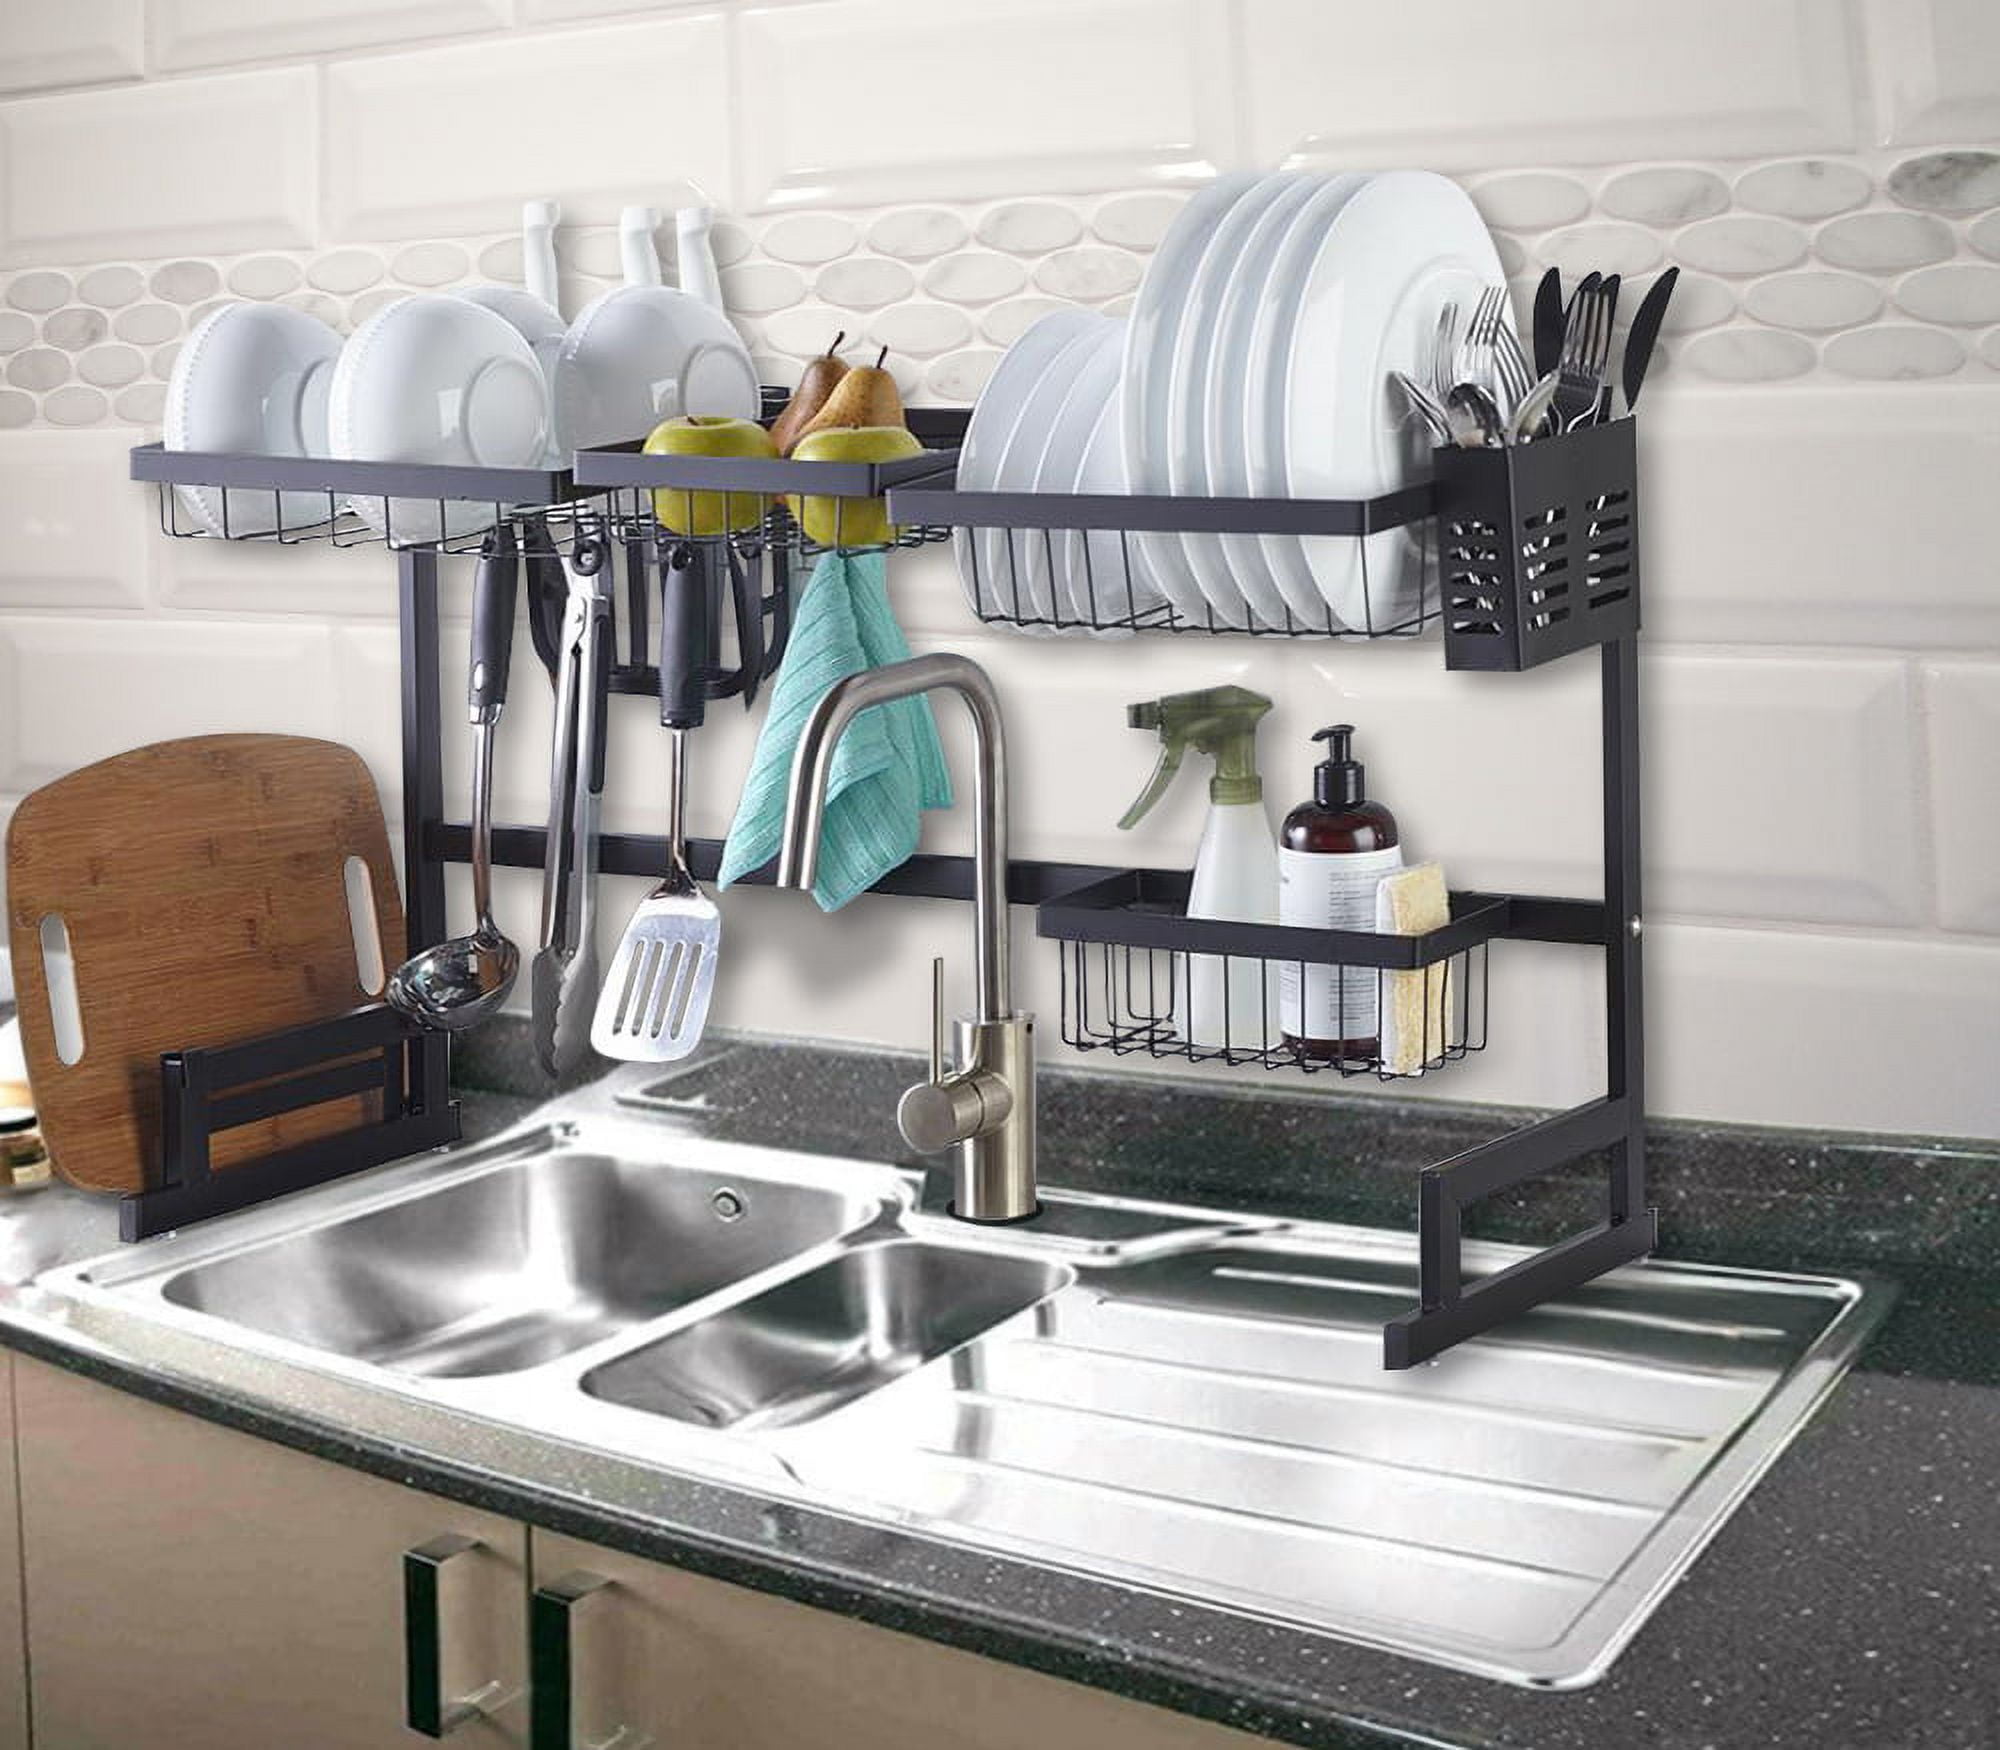 Lexi Home 5 -Piece Stainless Steel MIni Kitchen Utensil Set